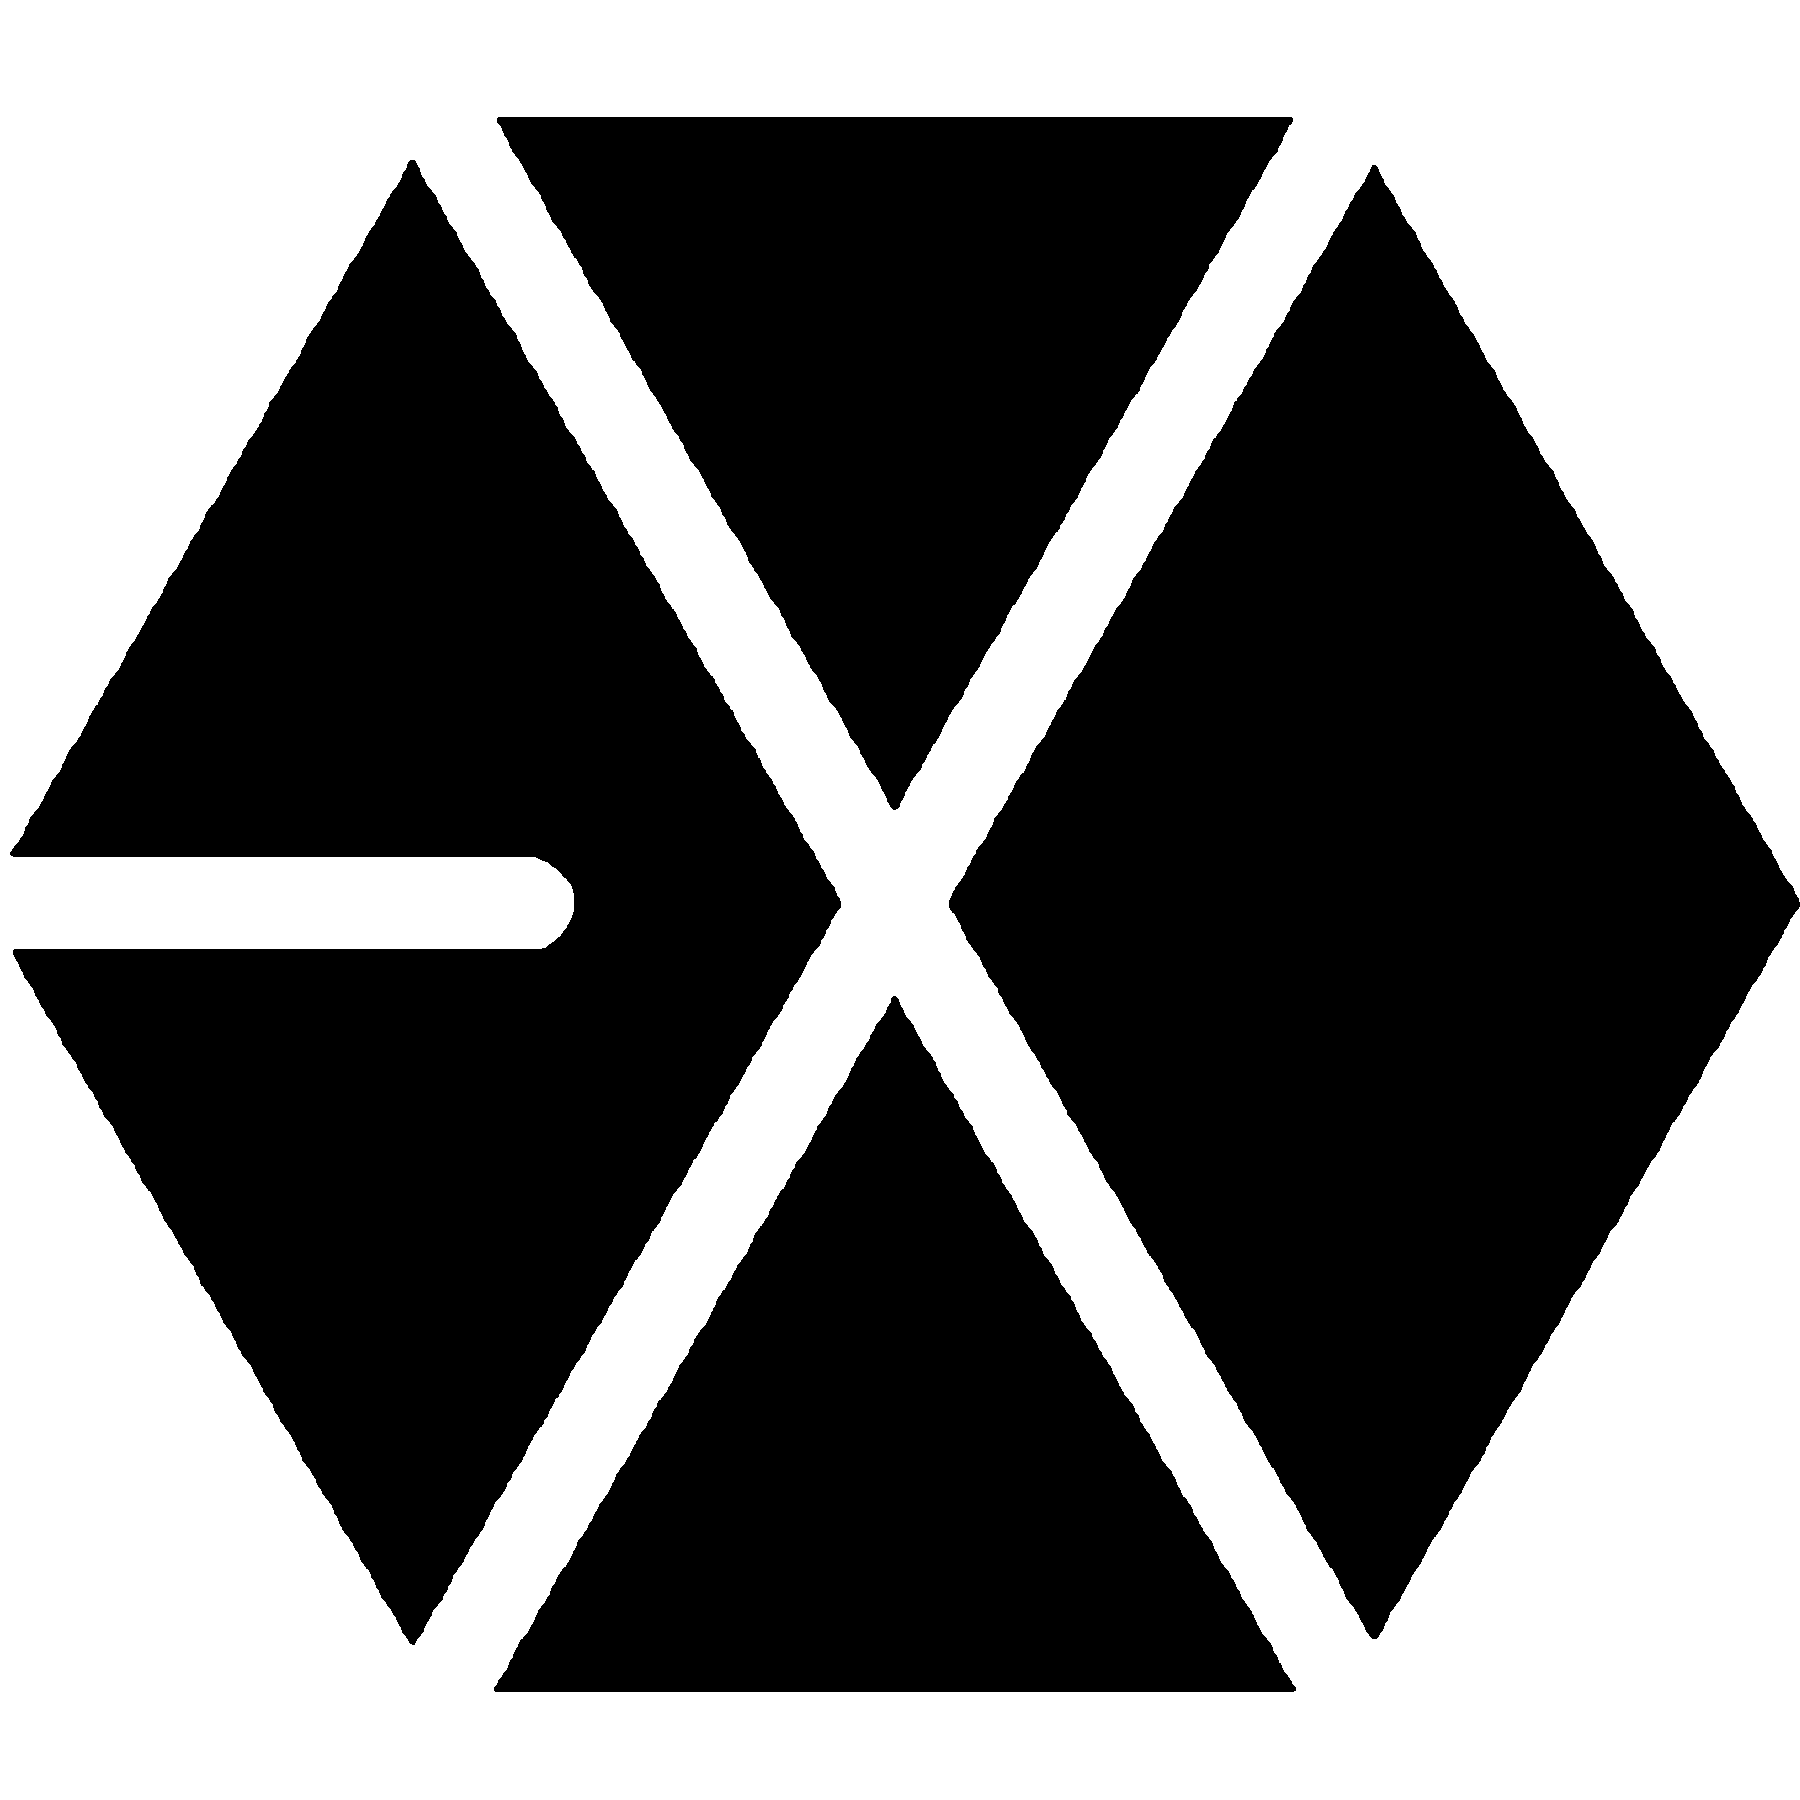 EXO Logo - Image - Exo logo 4.png | EXO Wiki | FANDOM powered by Wikia